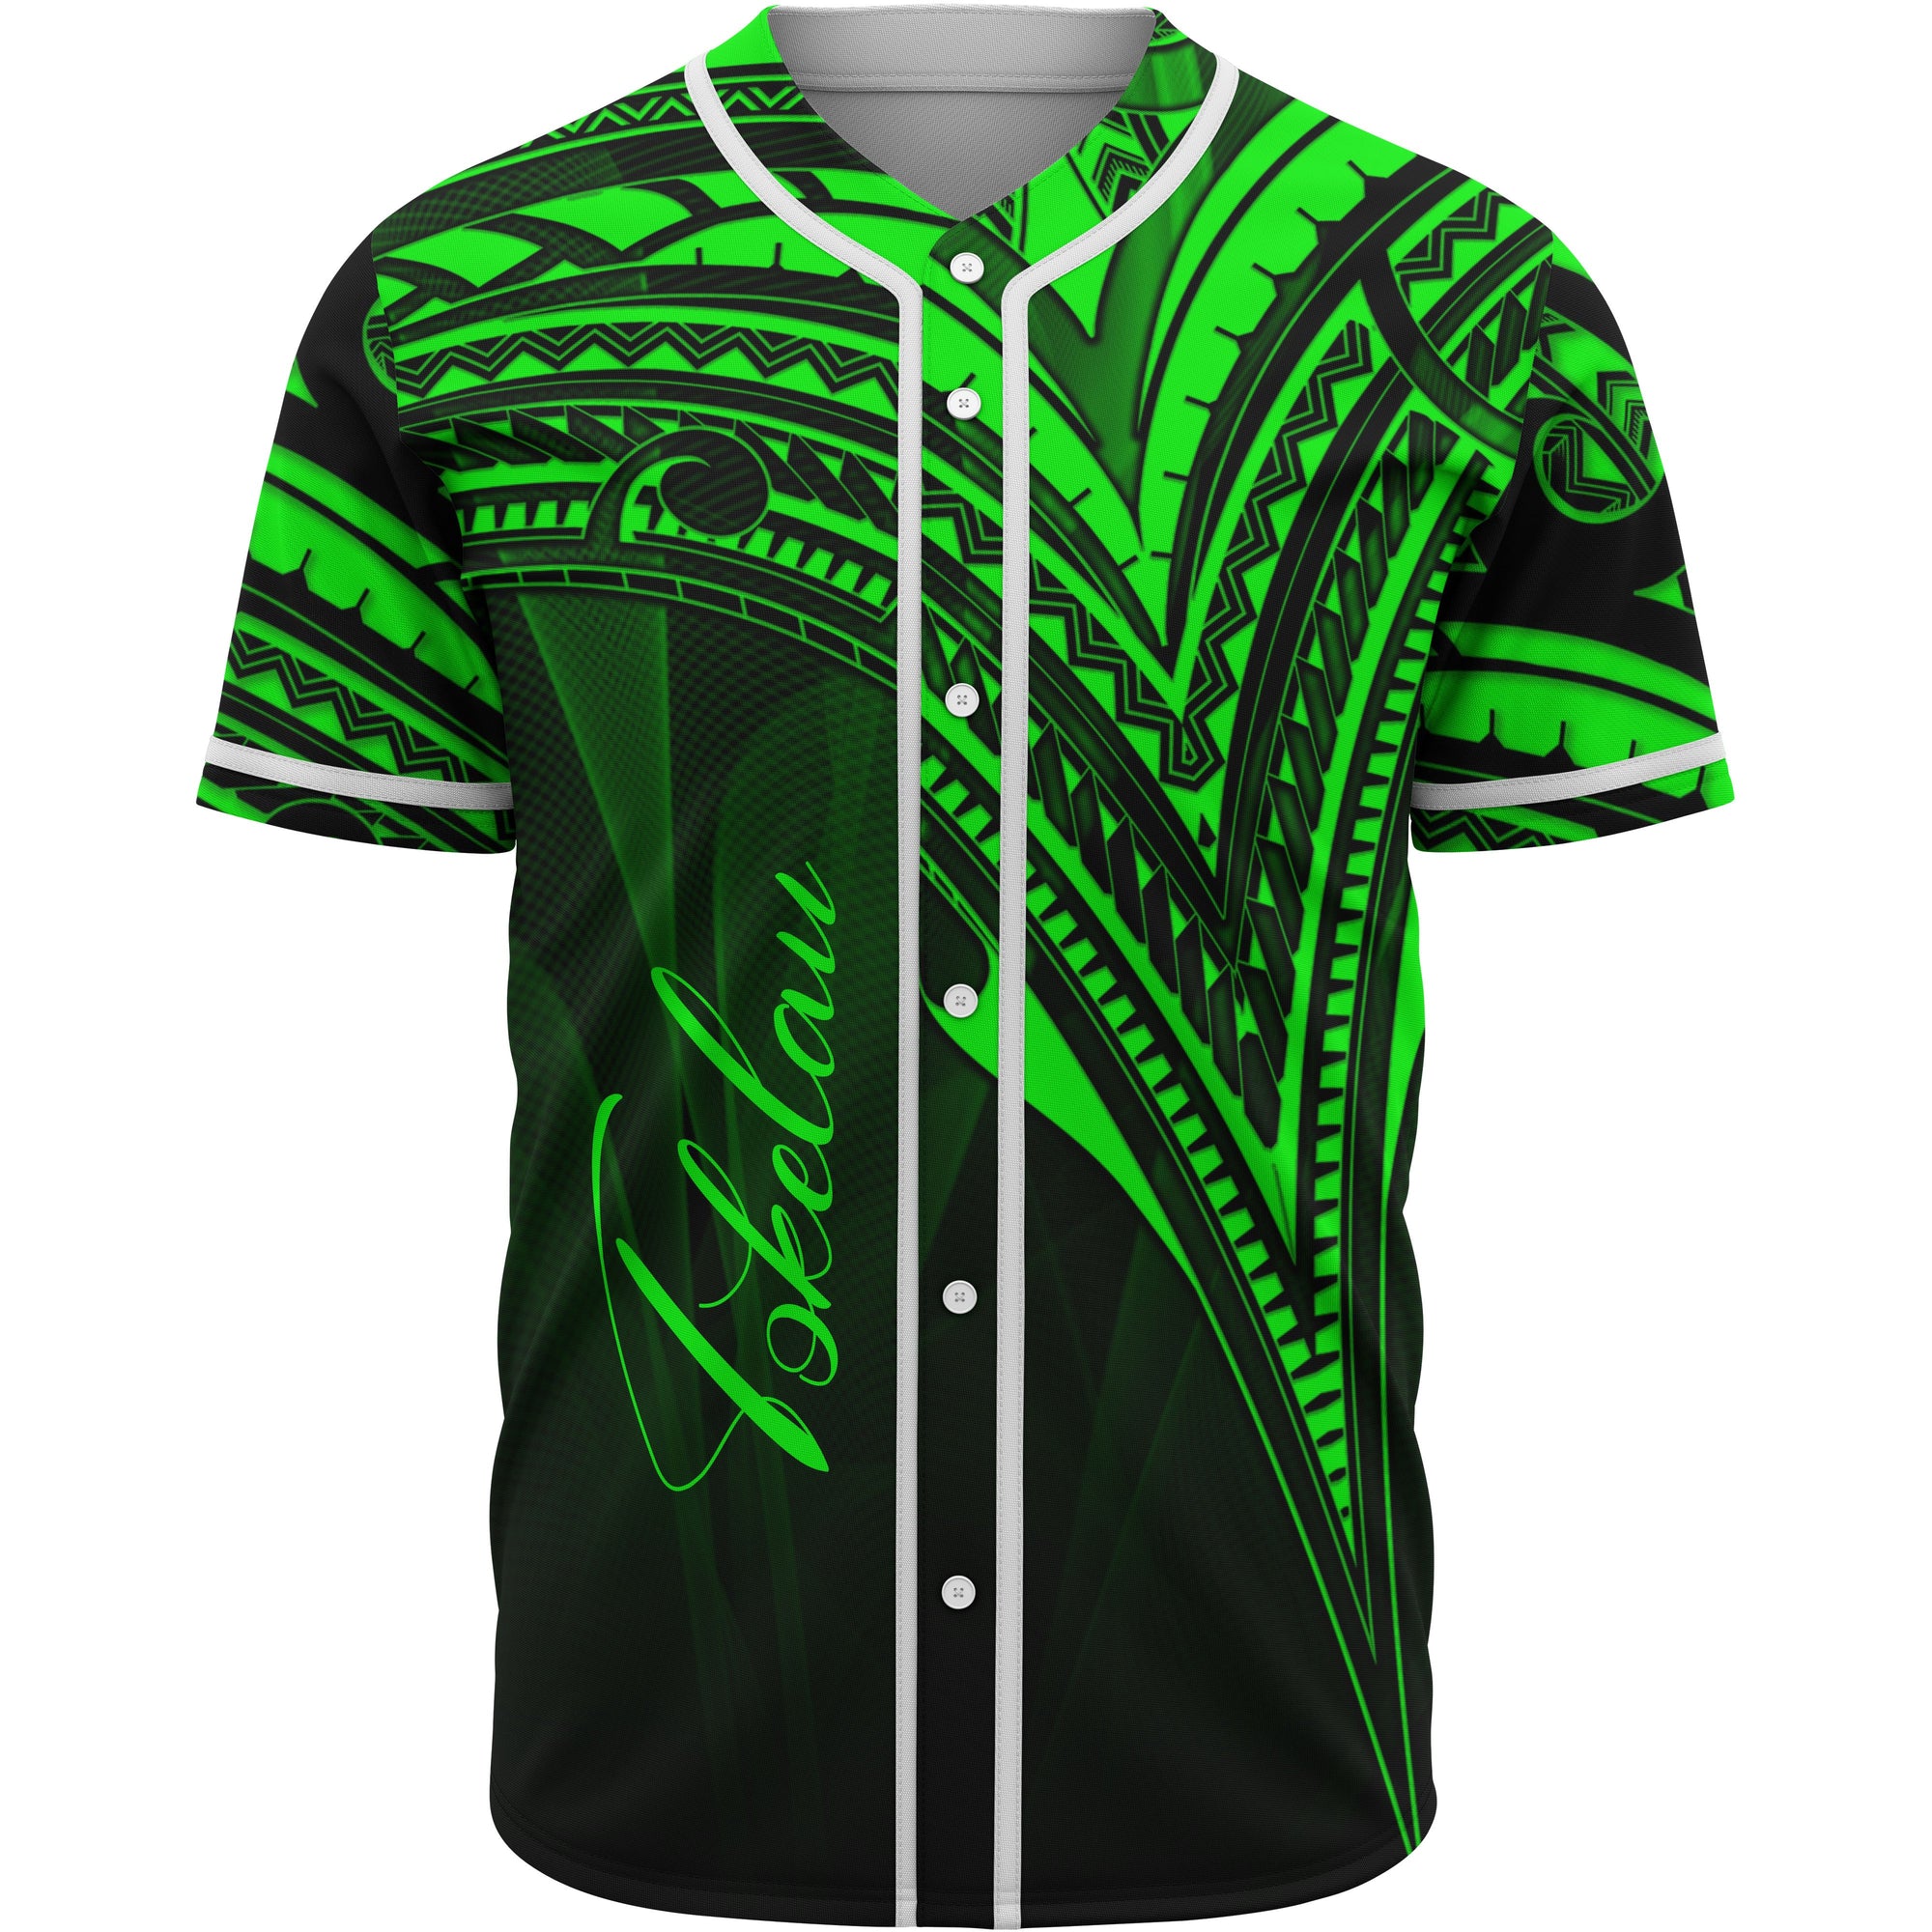 Tokelau Baseball Shirt - Green Color Cross Style Unisex Black - Polynesian Pride